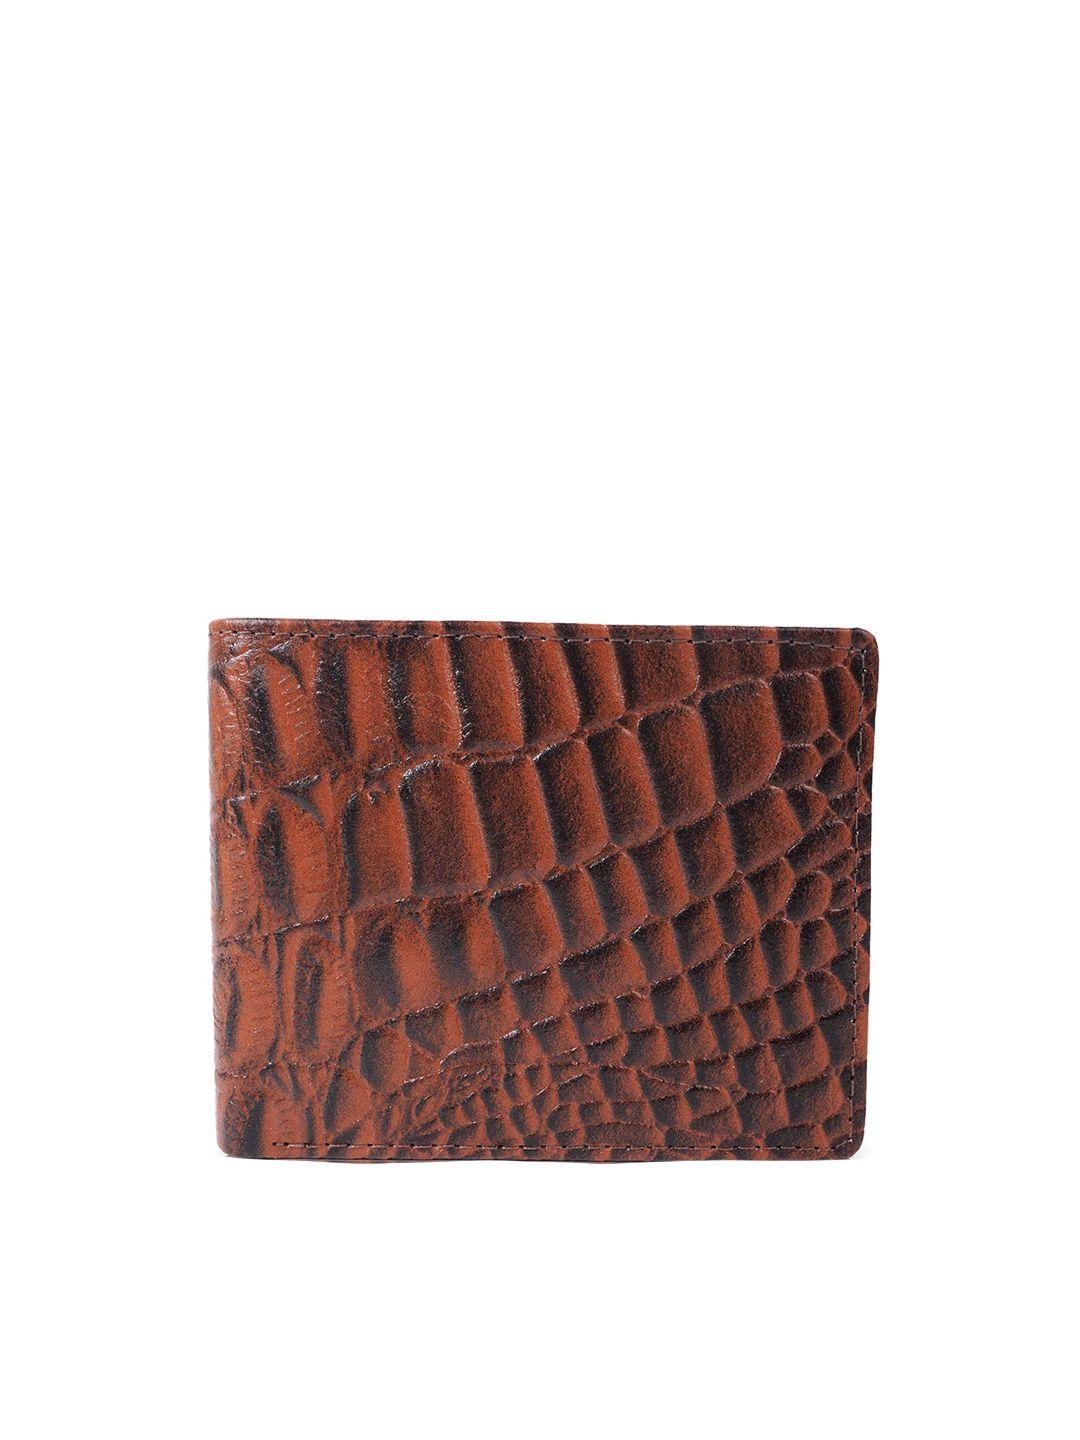 cimoni unisex brown leather two fold wallet